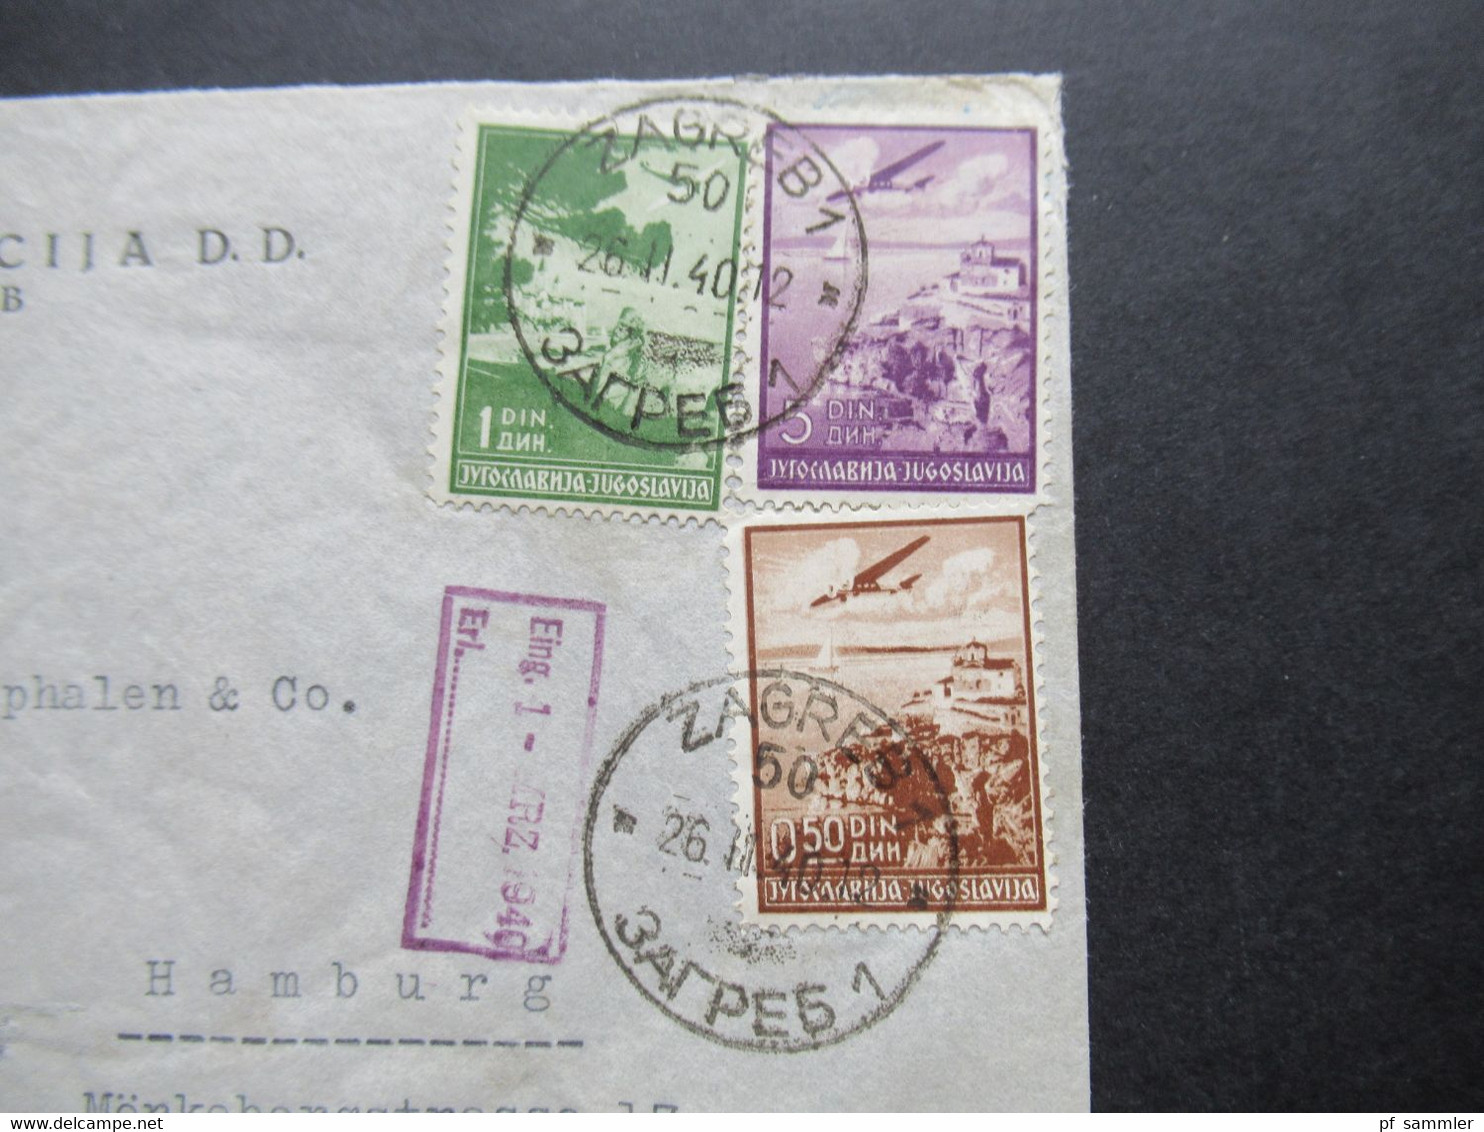 Jugoslawien 1940 Zensurbeleg / OKW Zensur / Mehrfachzensur Luftpost Jugofarmacija D.D. An Westphalen & Co. In Hamburg - Covers & Documents